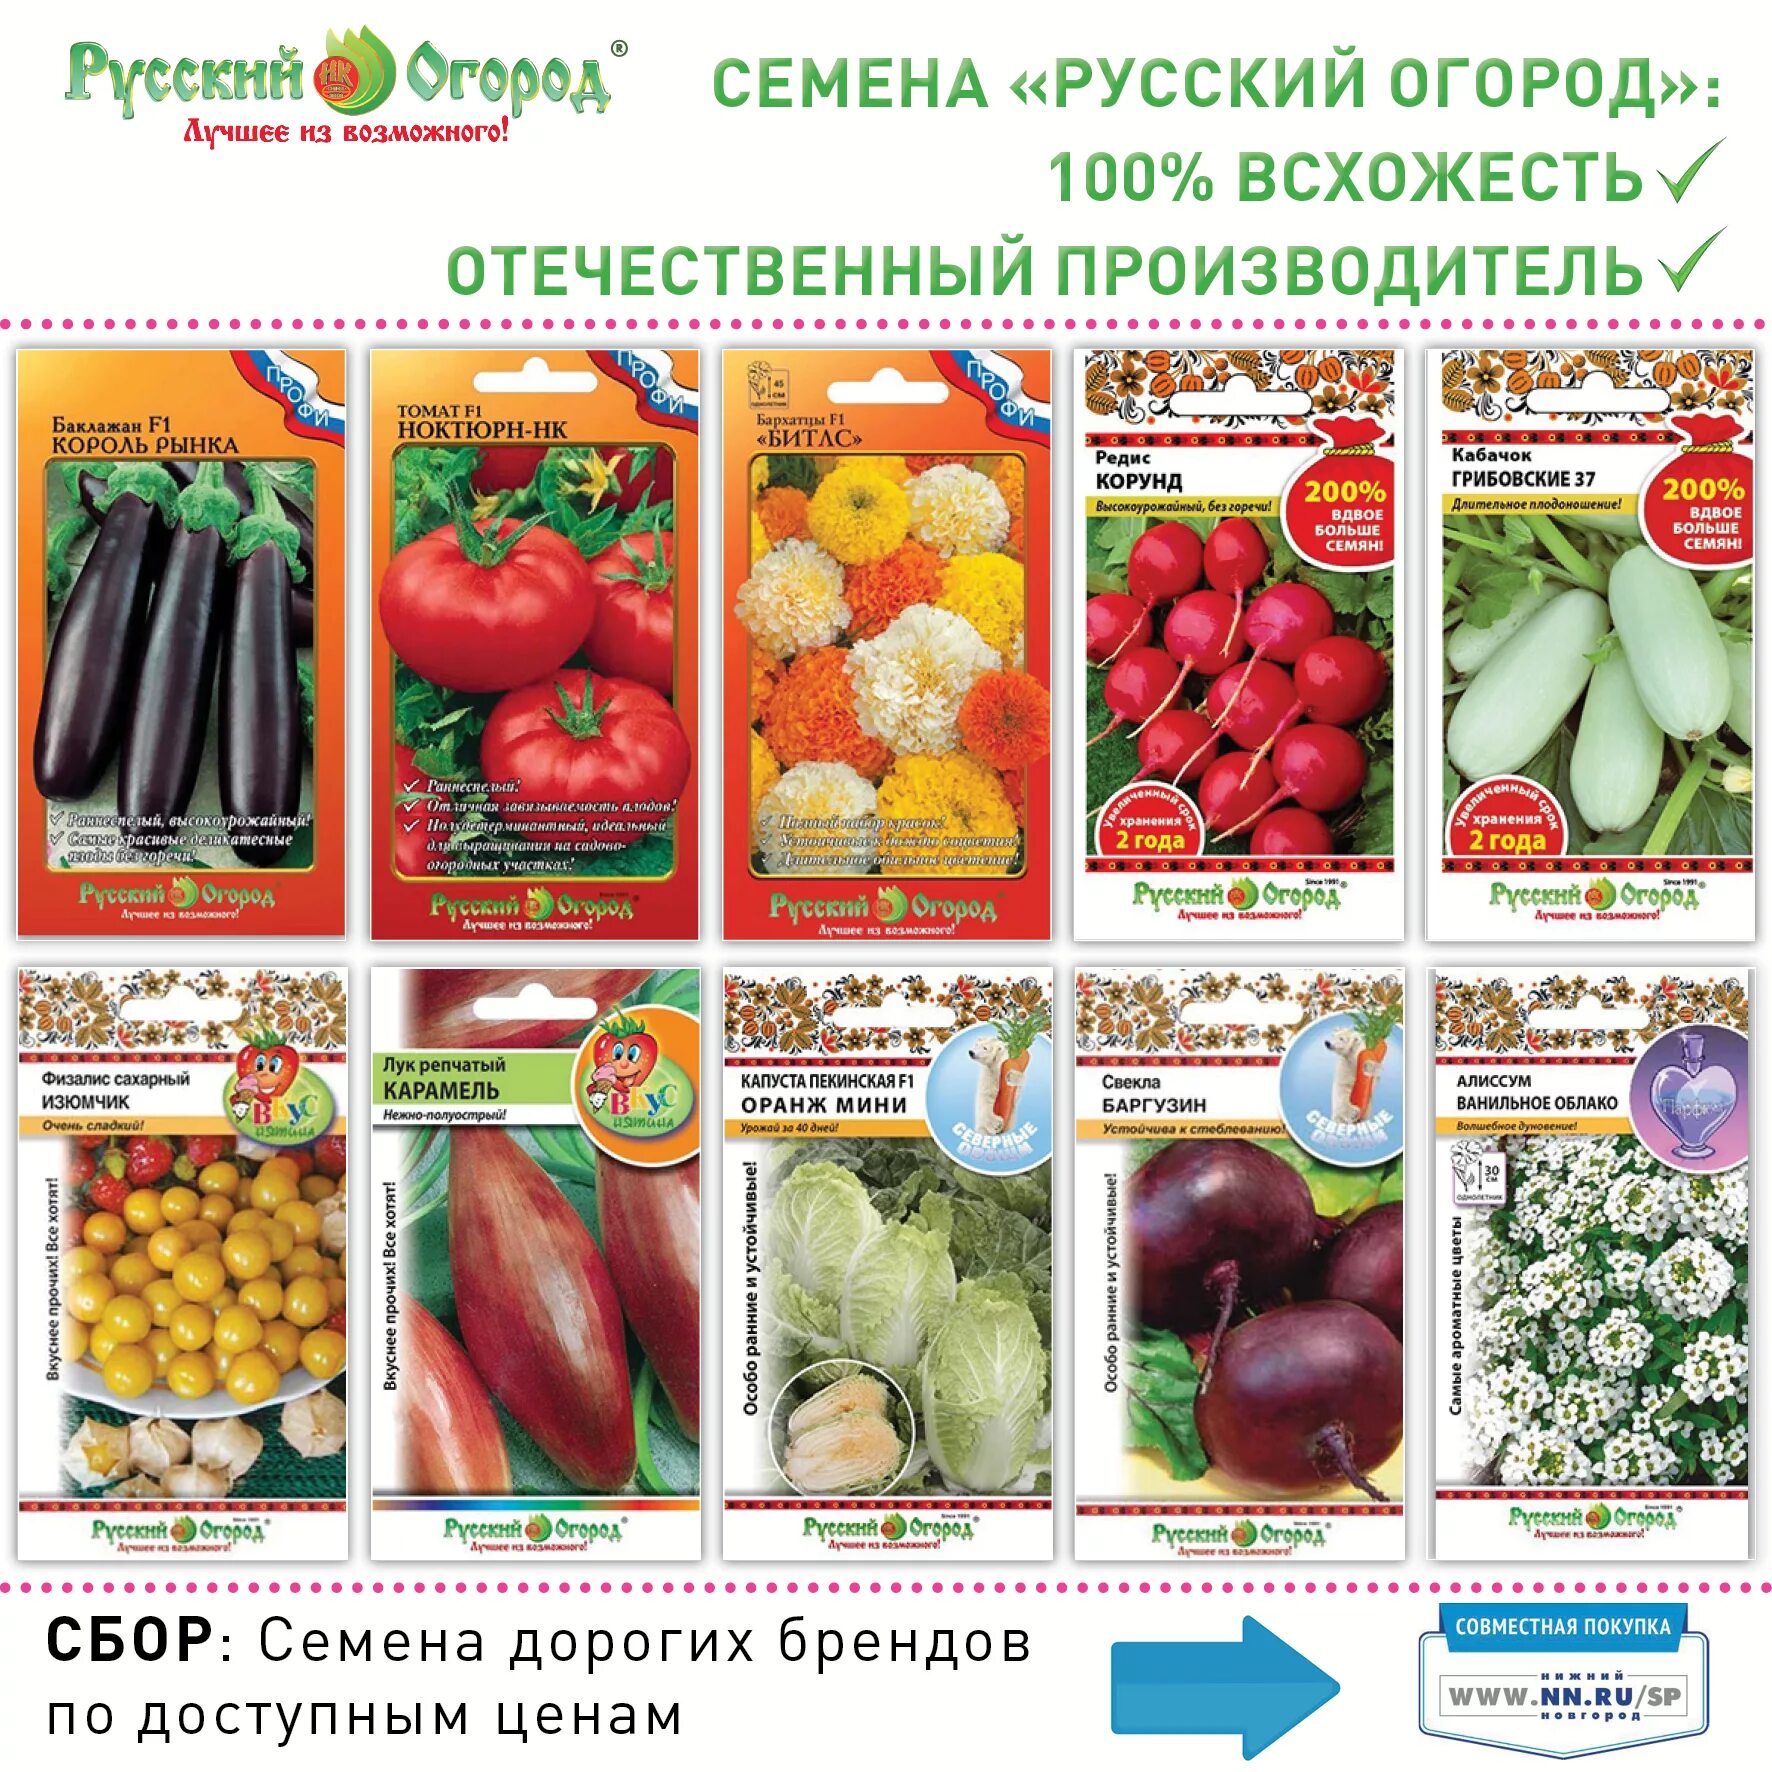 Сайт заказать семена. Семена овощей. Семена для огорода. Семена русский огород интернет магазин. Производители семян.